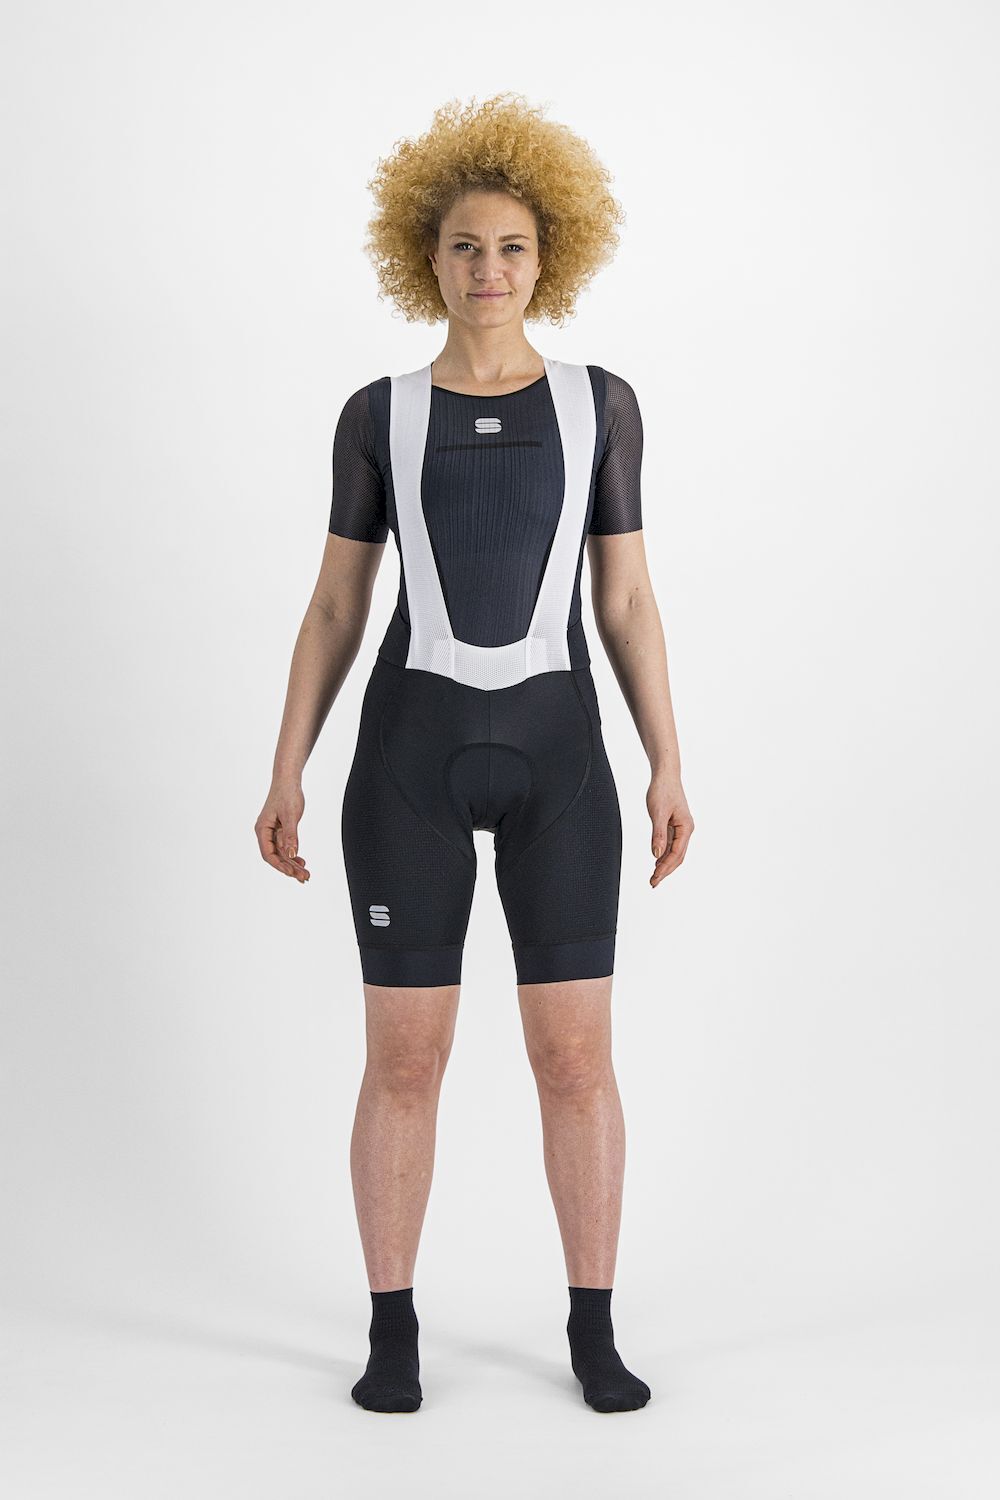 Sportful LTD - Cycling shorts - Women's